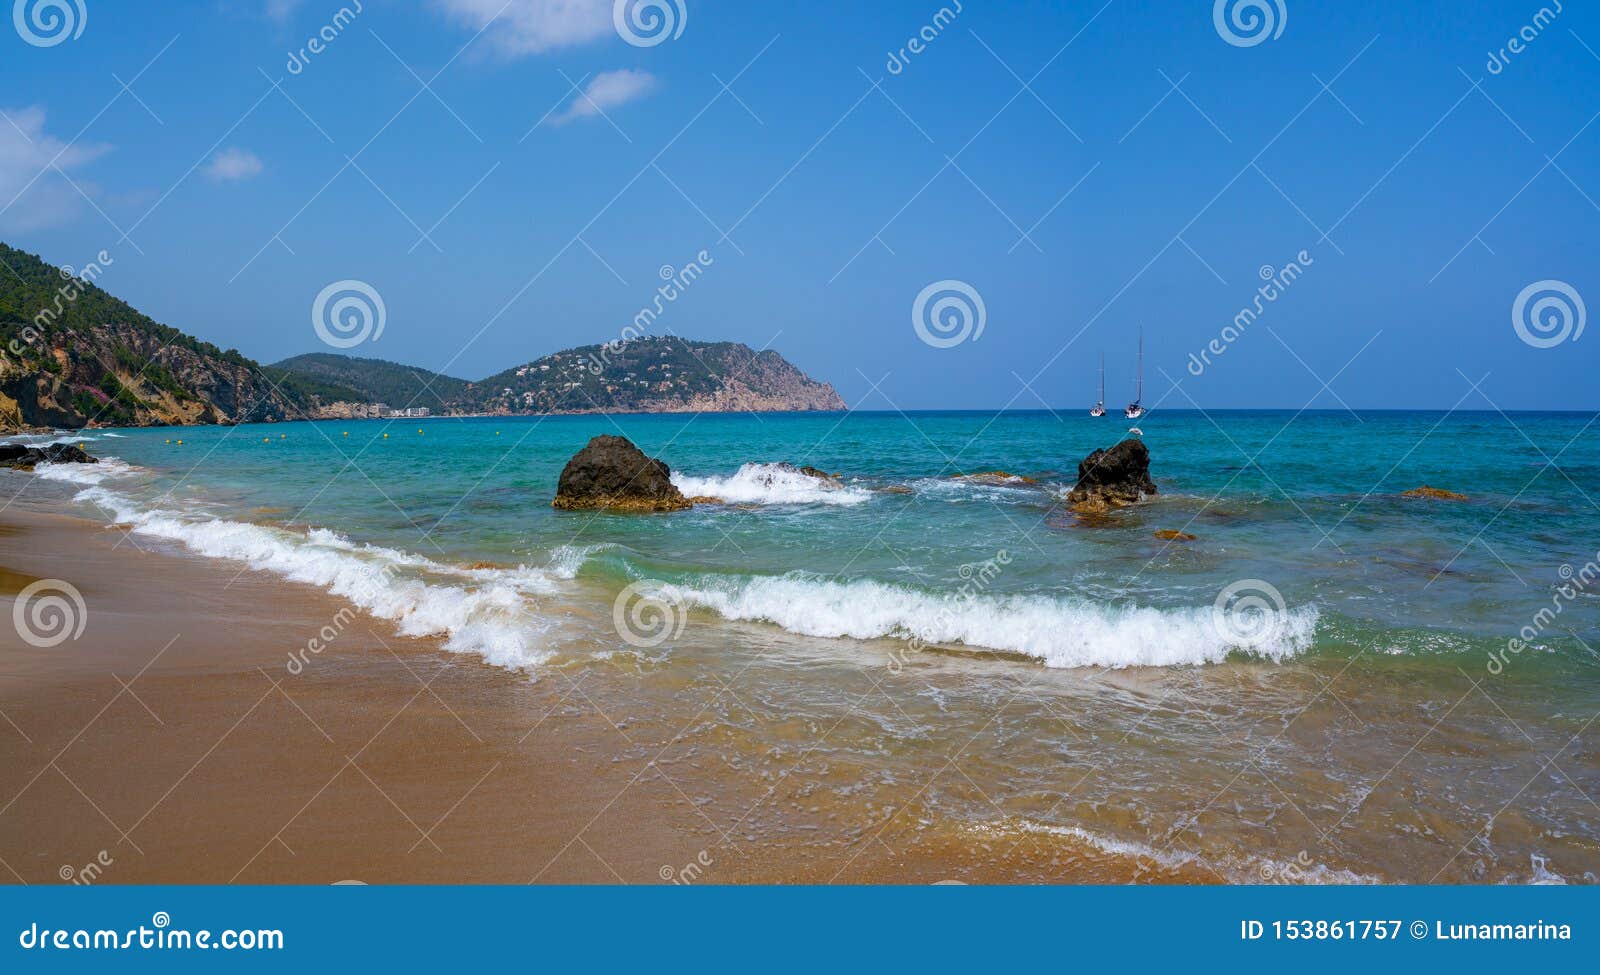 ibiza beach aigua blanca in santa eulalia